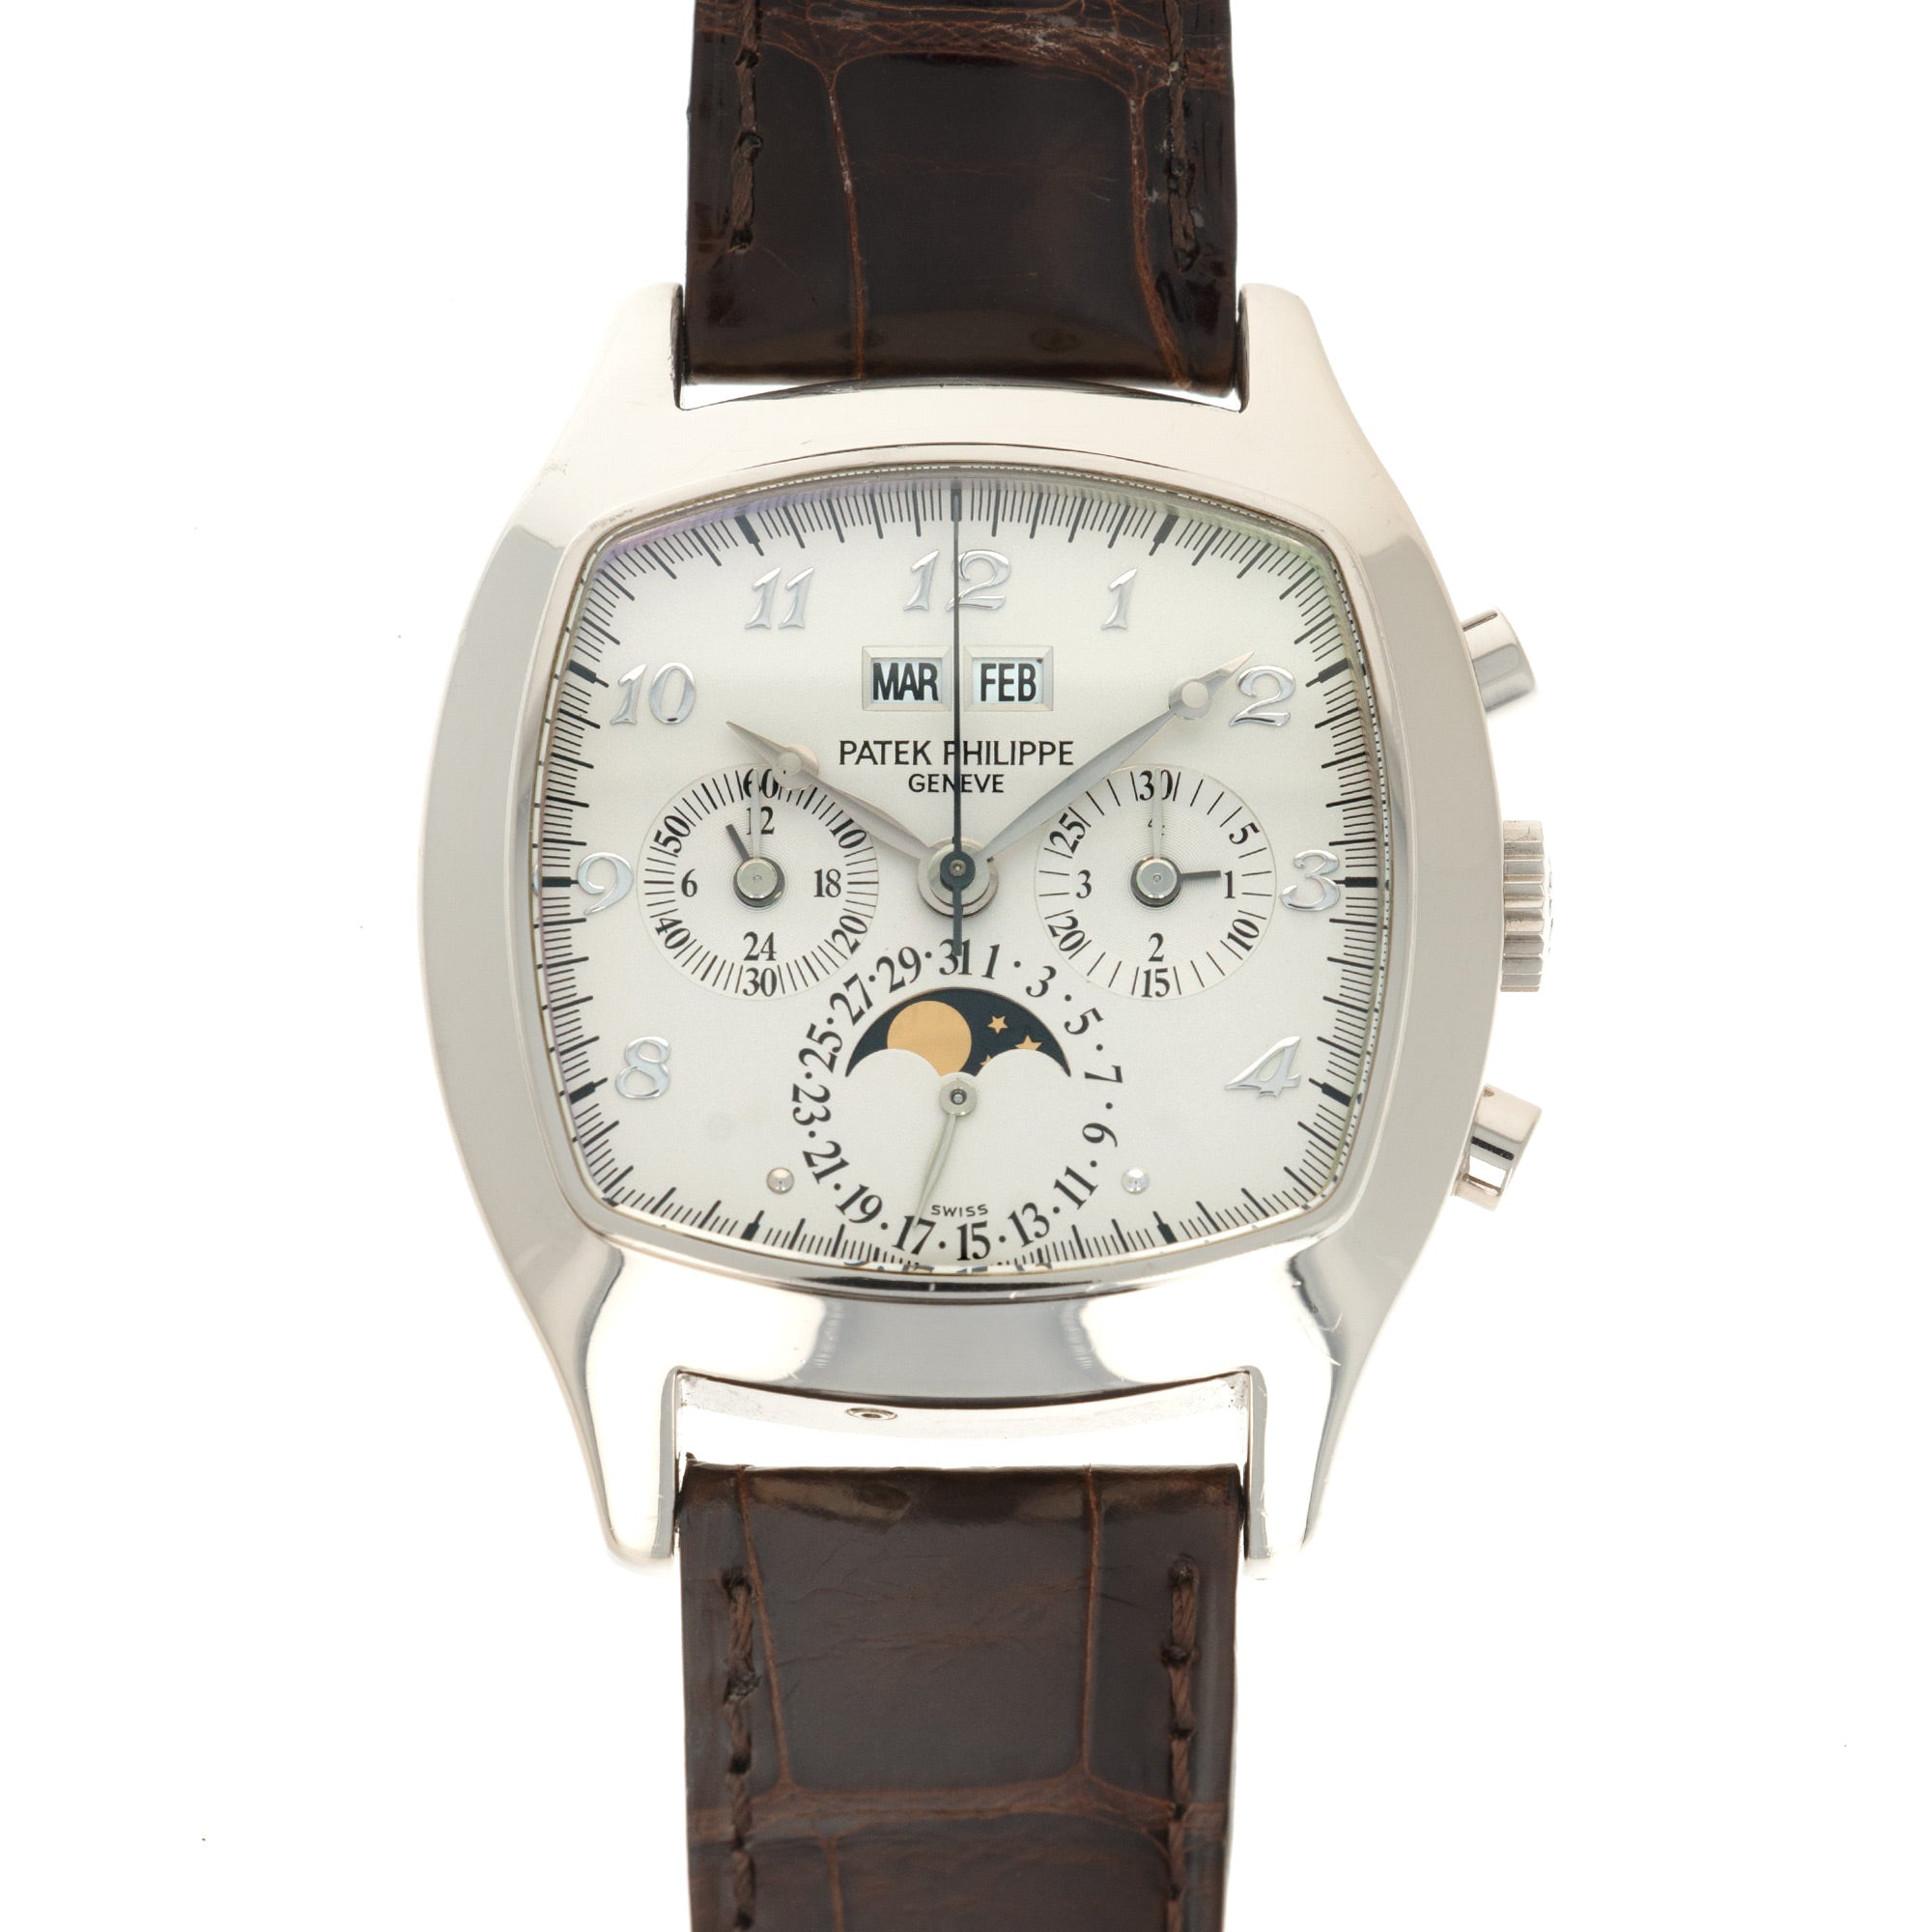 Patek Philippe - Patek Philippe White Gold Perpetual Calendar Chrono Watch Ref. 5020 - The Keystone Watches